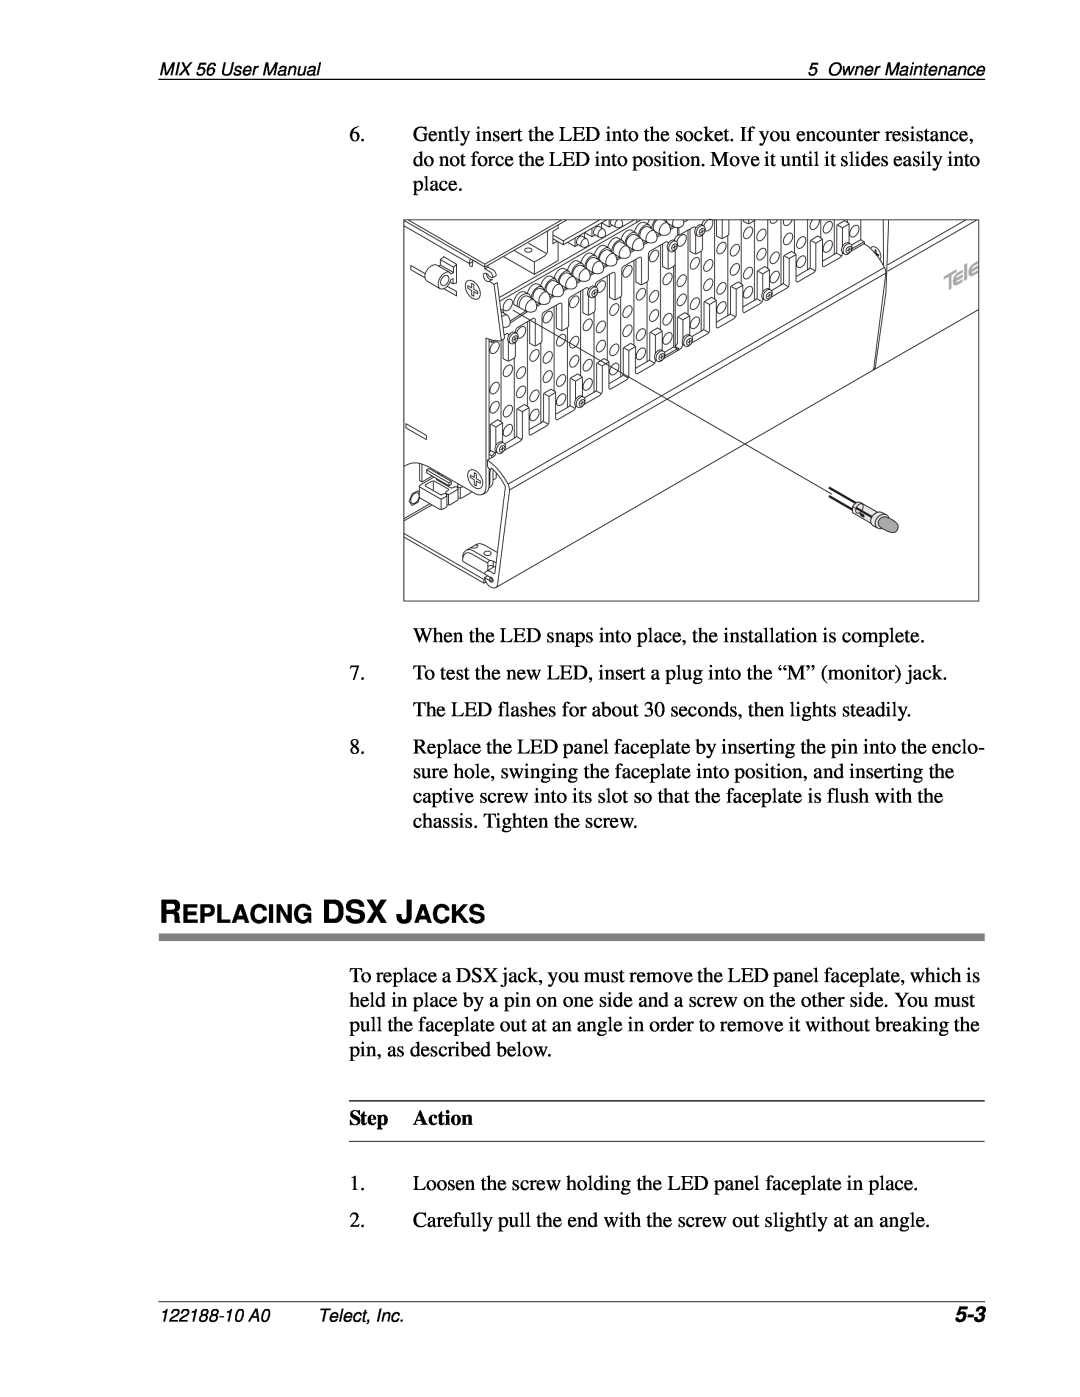 Telect MIX 56 user manual Replacing Dsx Jacks, Step Action 